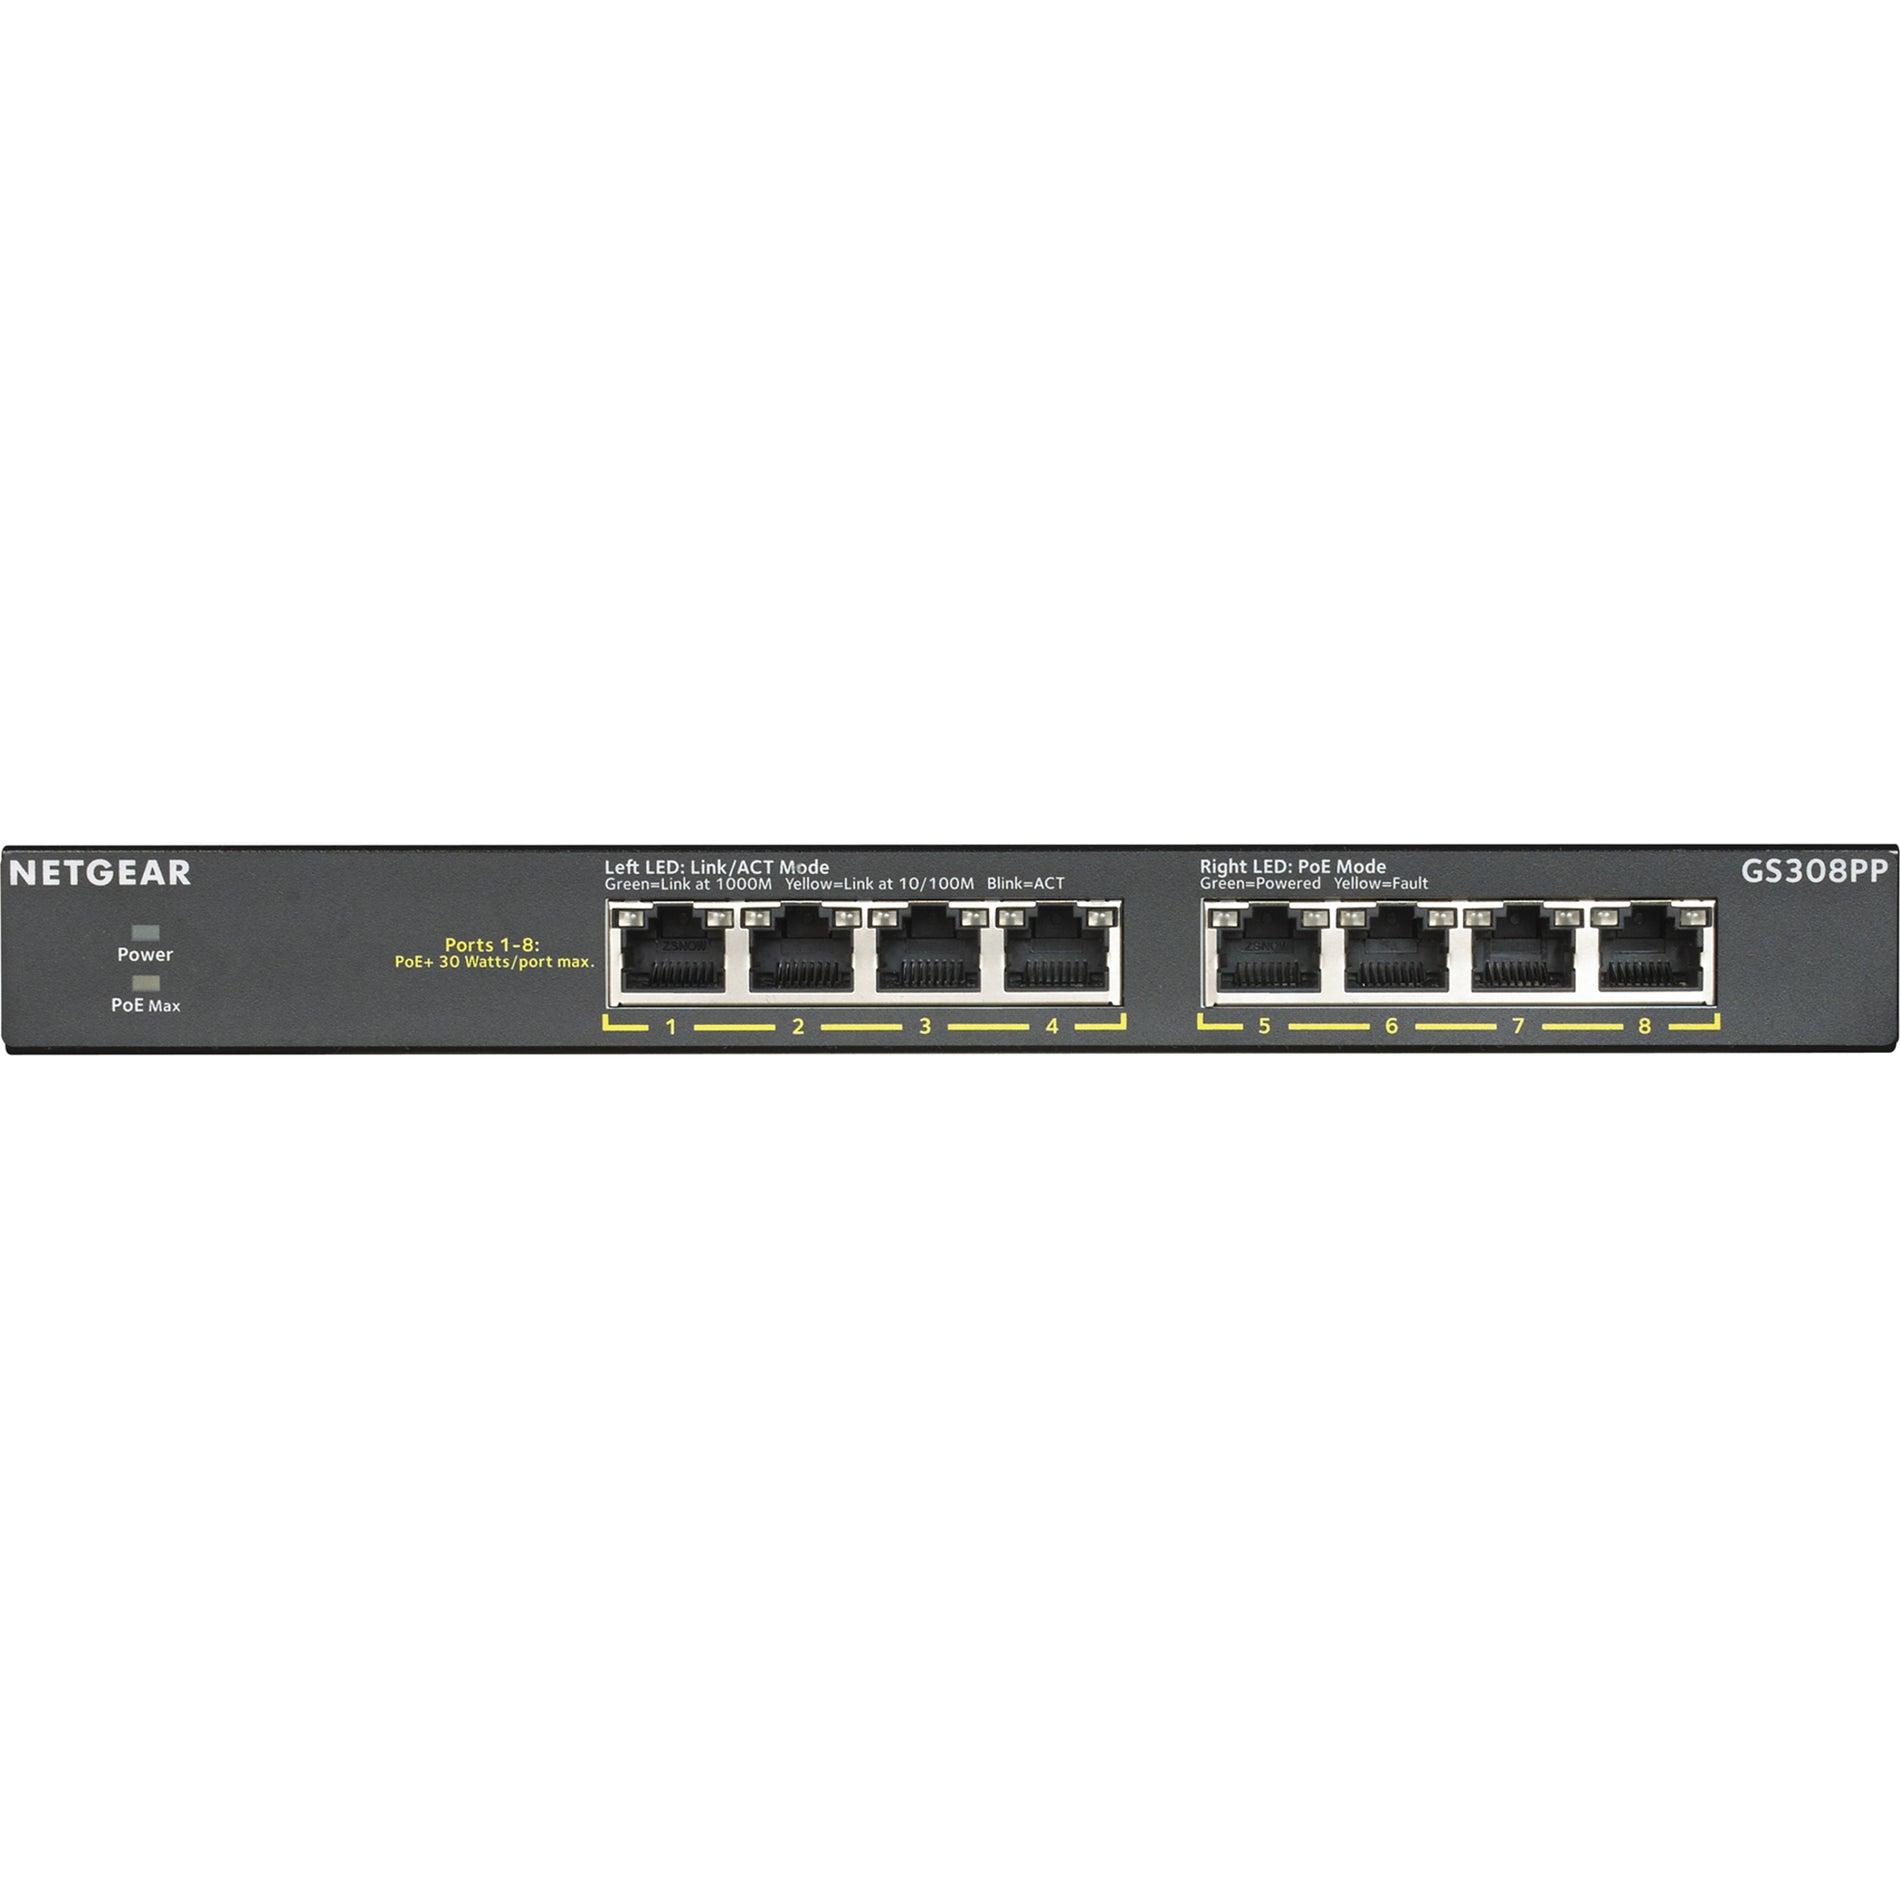 Netgear GS308PP-100NAS GS308PP Ethernet Switch, 8 Port Gigabit Ethernet PoE+, 3 Year Lifetime Warranty